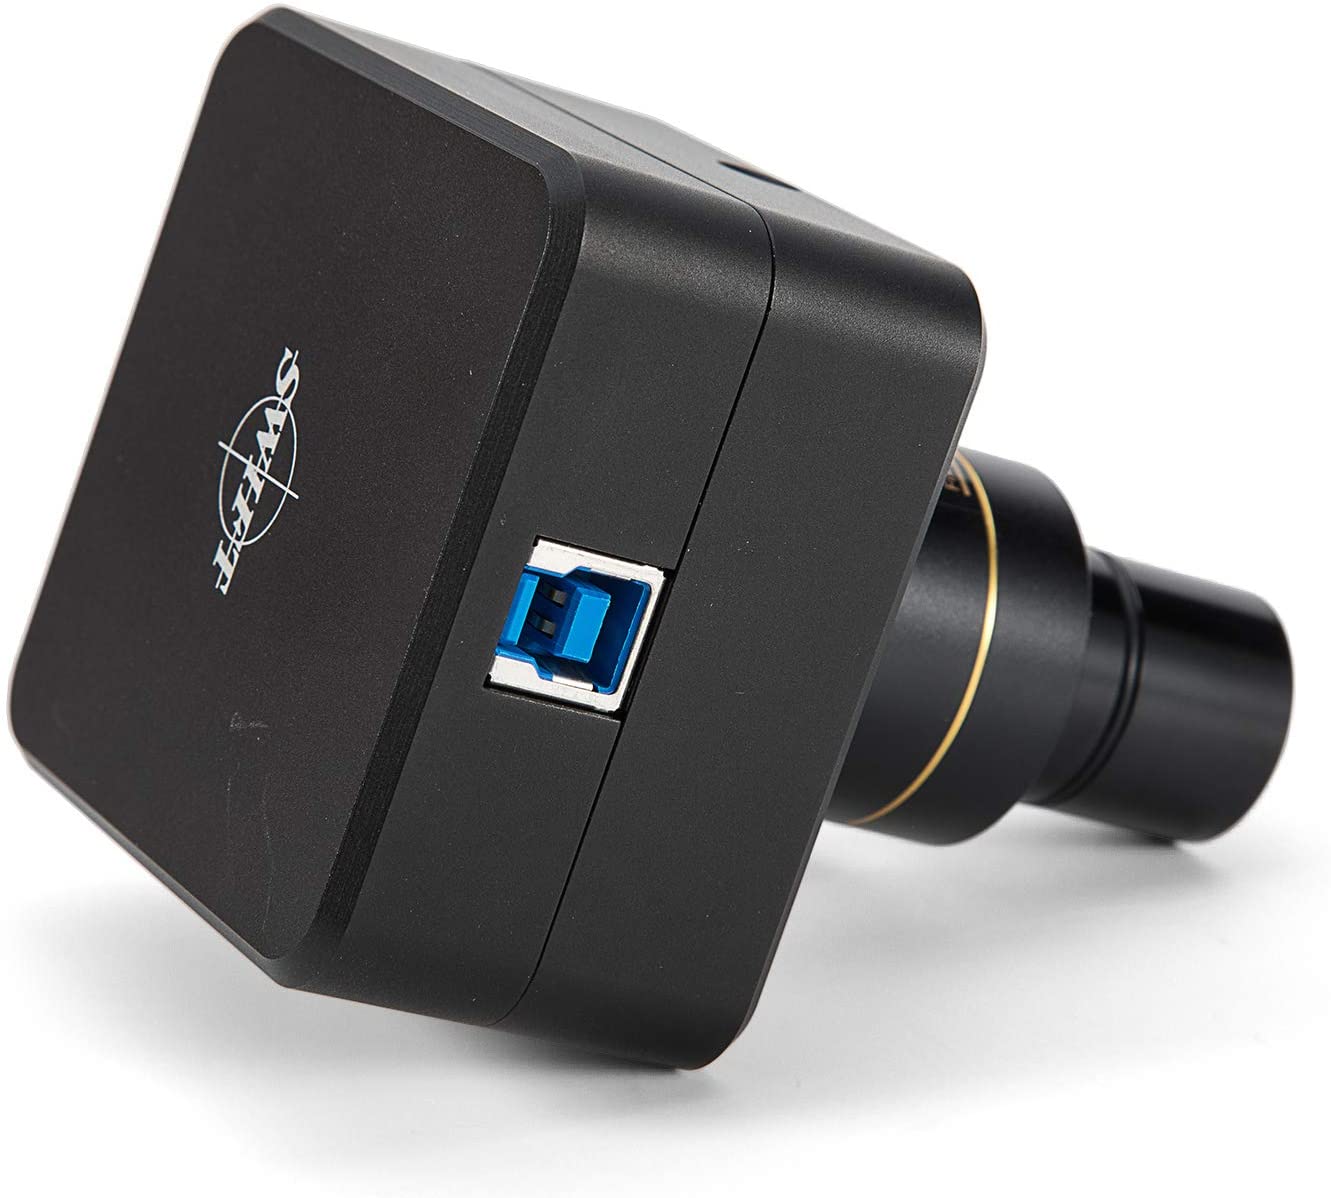 Swiftcam - Cámara de 18 megapíxeles para microscopios, con lente de reducción, kit de calibración, adaptadores de Eyetube y cable USB 3.0, compatible con Windows/Mac/Linux